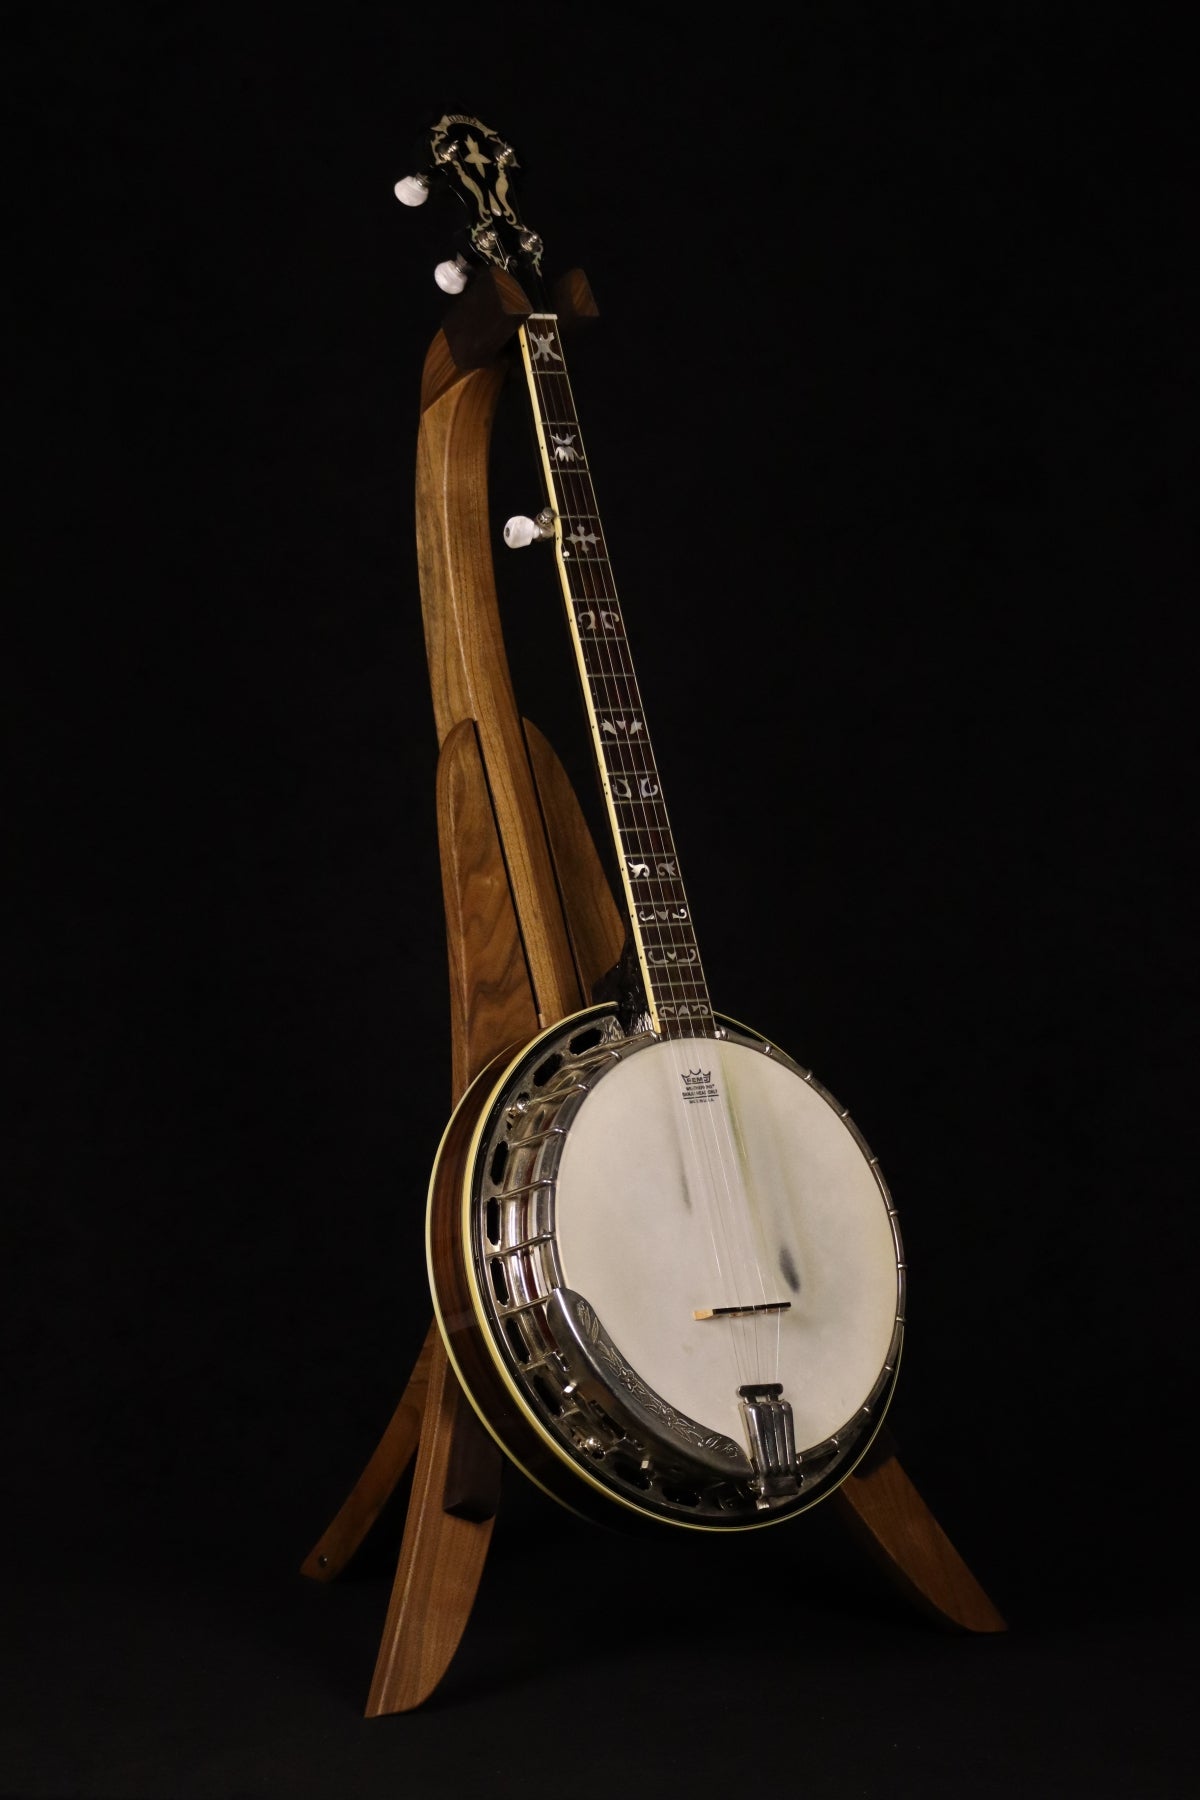 Folding walnut wood banjo floor stand full front image with Alvarez banjo